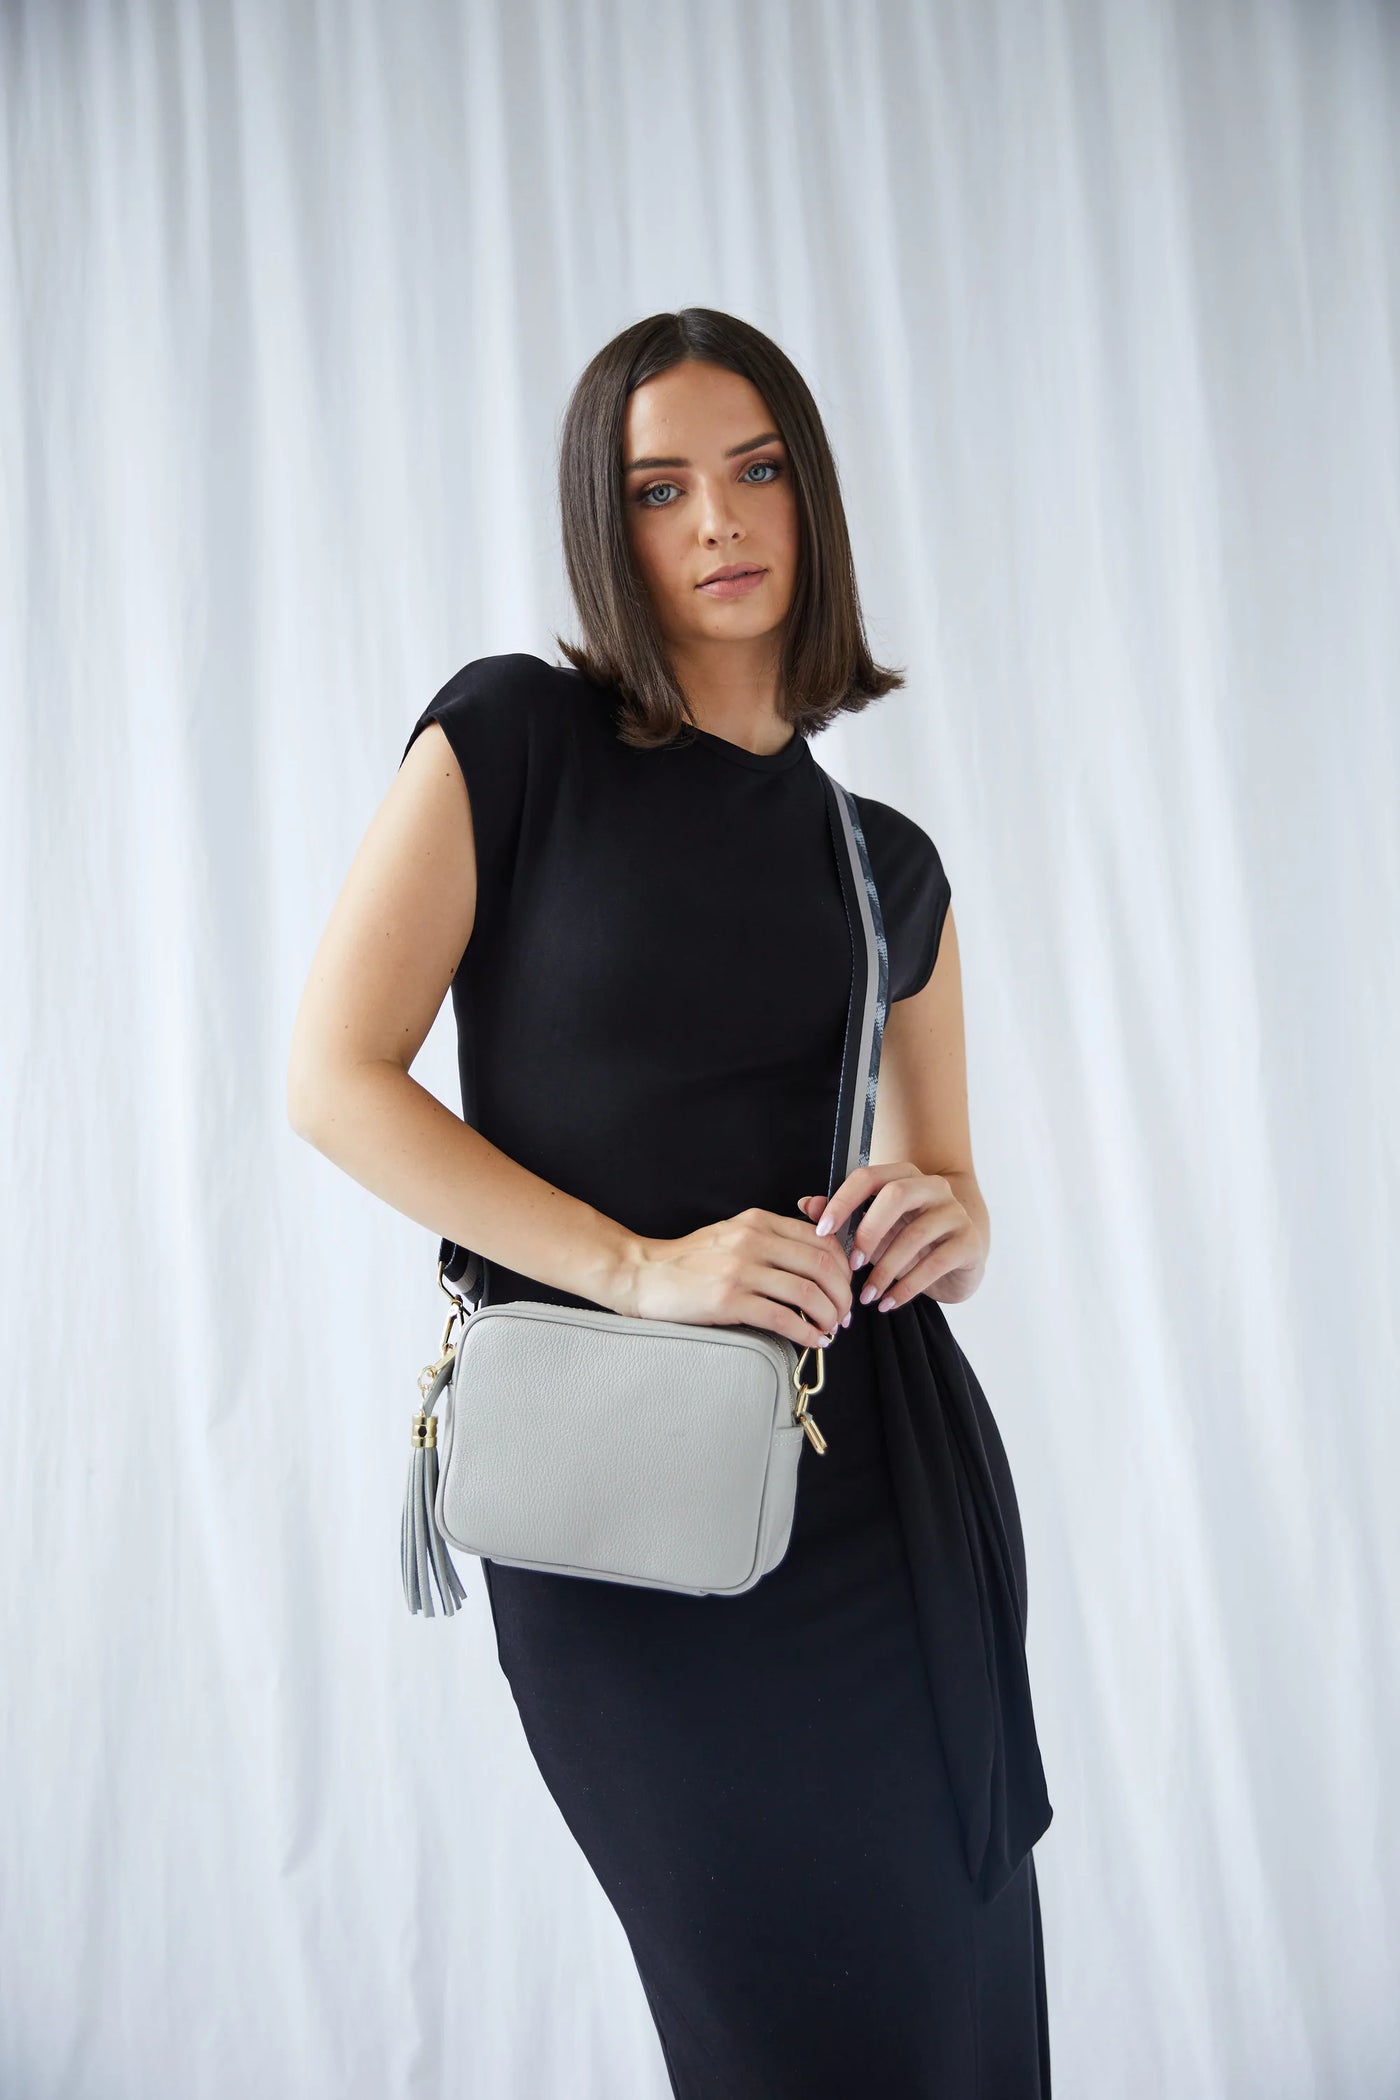 Elie Beaumont Designer Leather Crossbody Bag - Light Grey (GOLD Fittings)